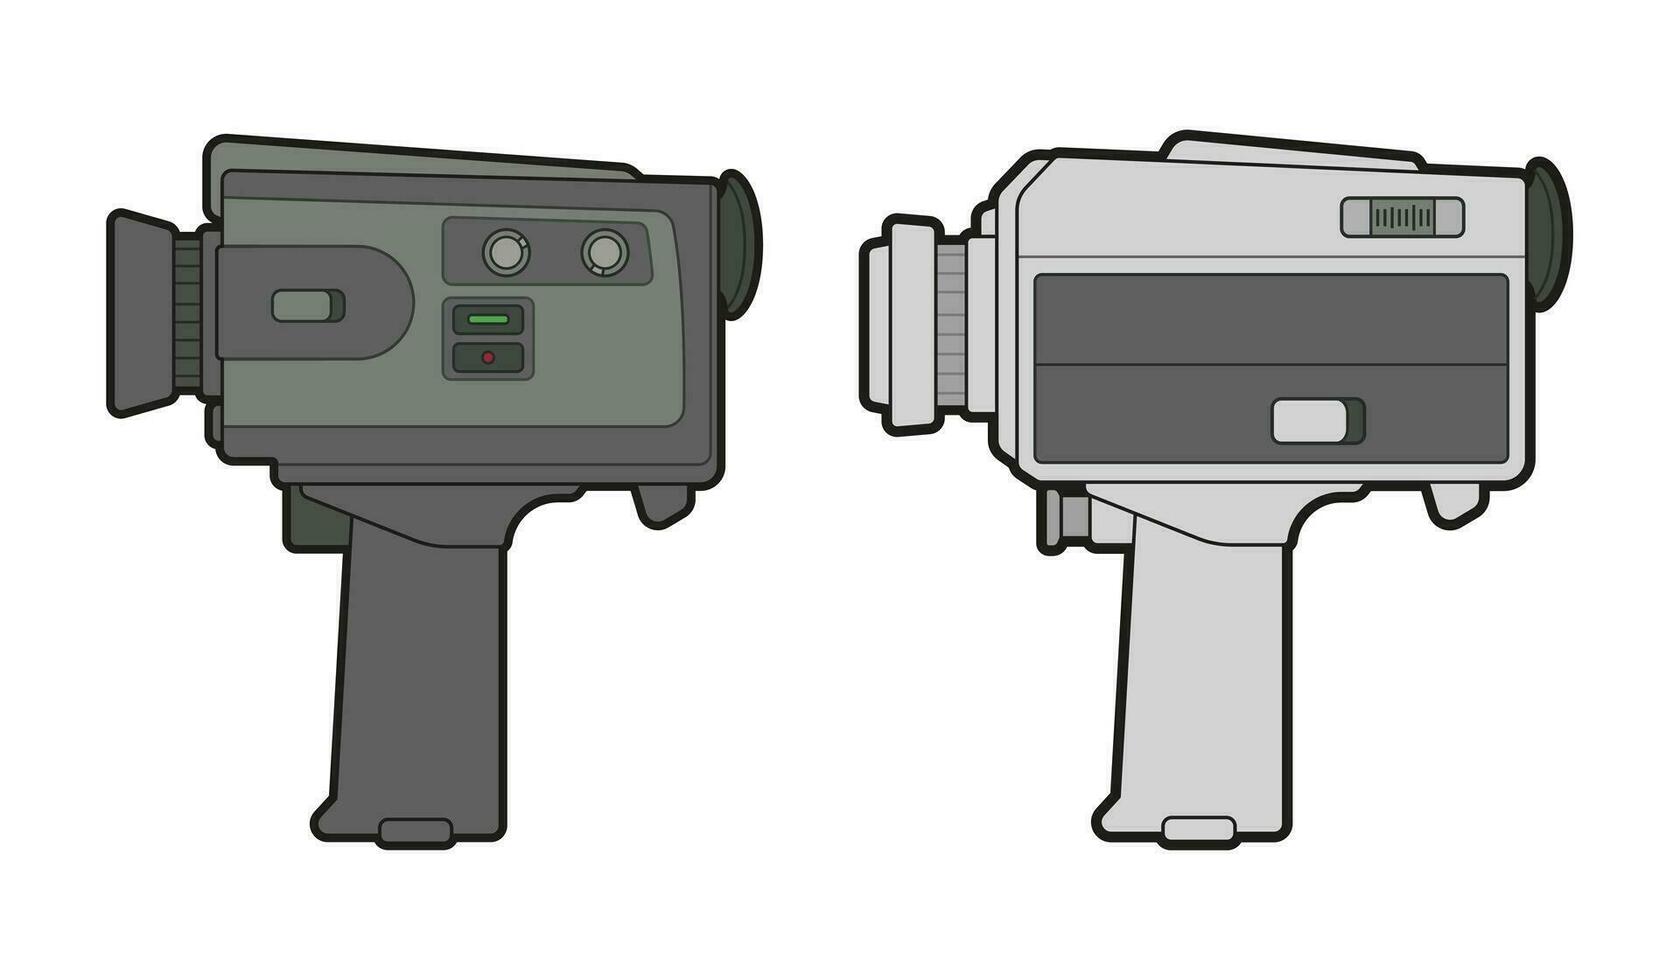 Vector illustration of vintage black and silver video cameras.